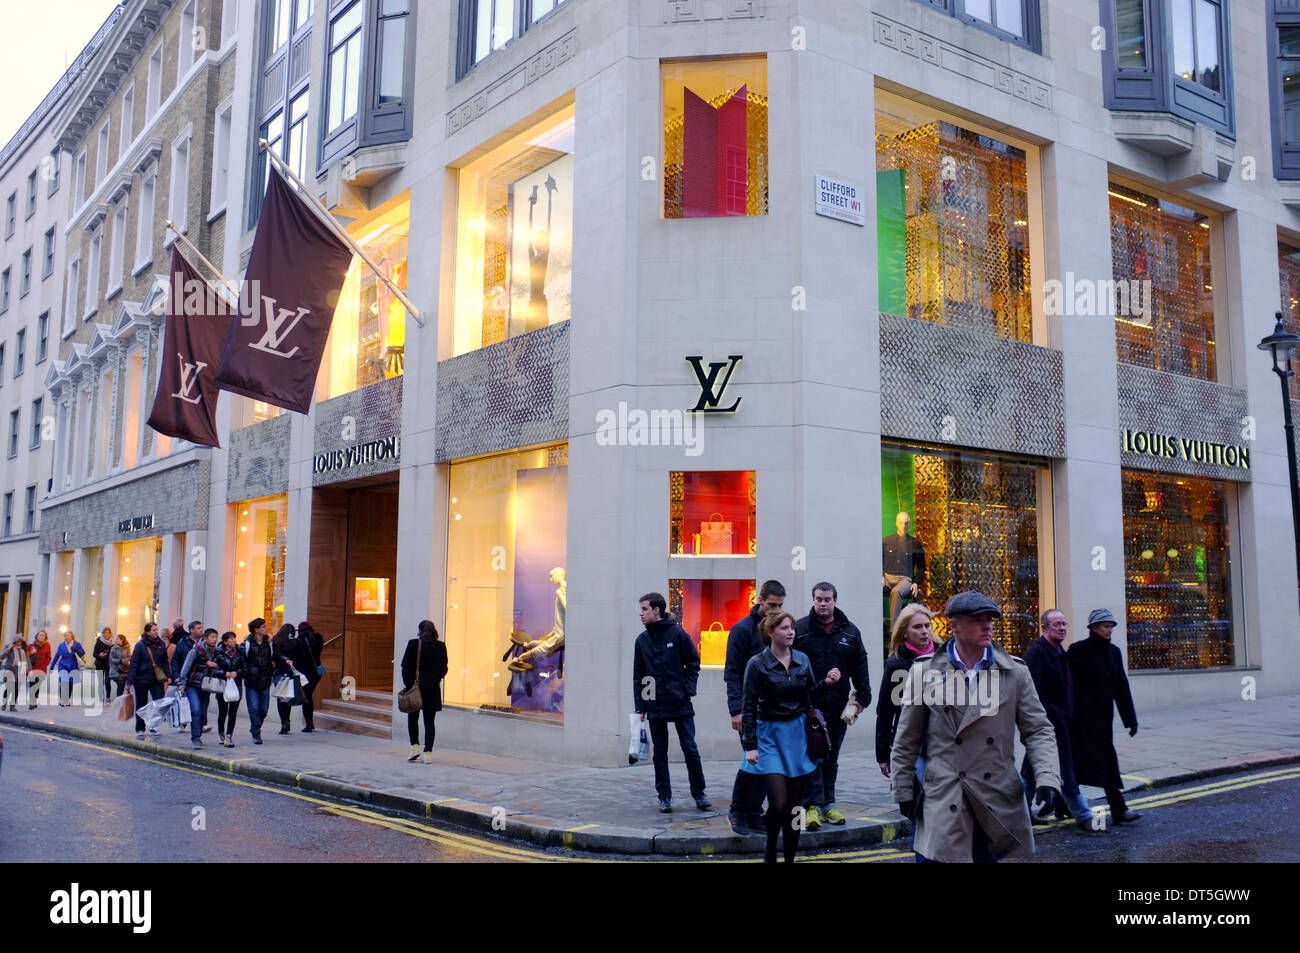 Louis Vuitton on corner of Bond street & Clifford Street, London Stock Photo: 66505877 - Alamy